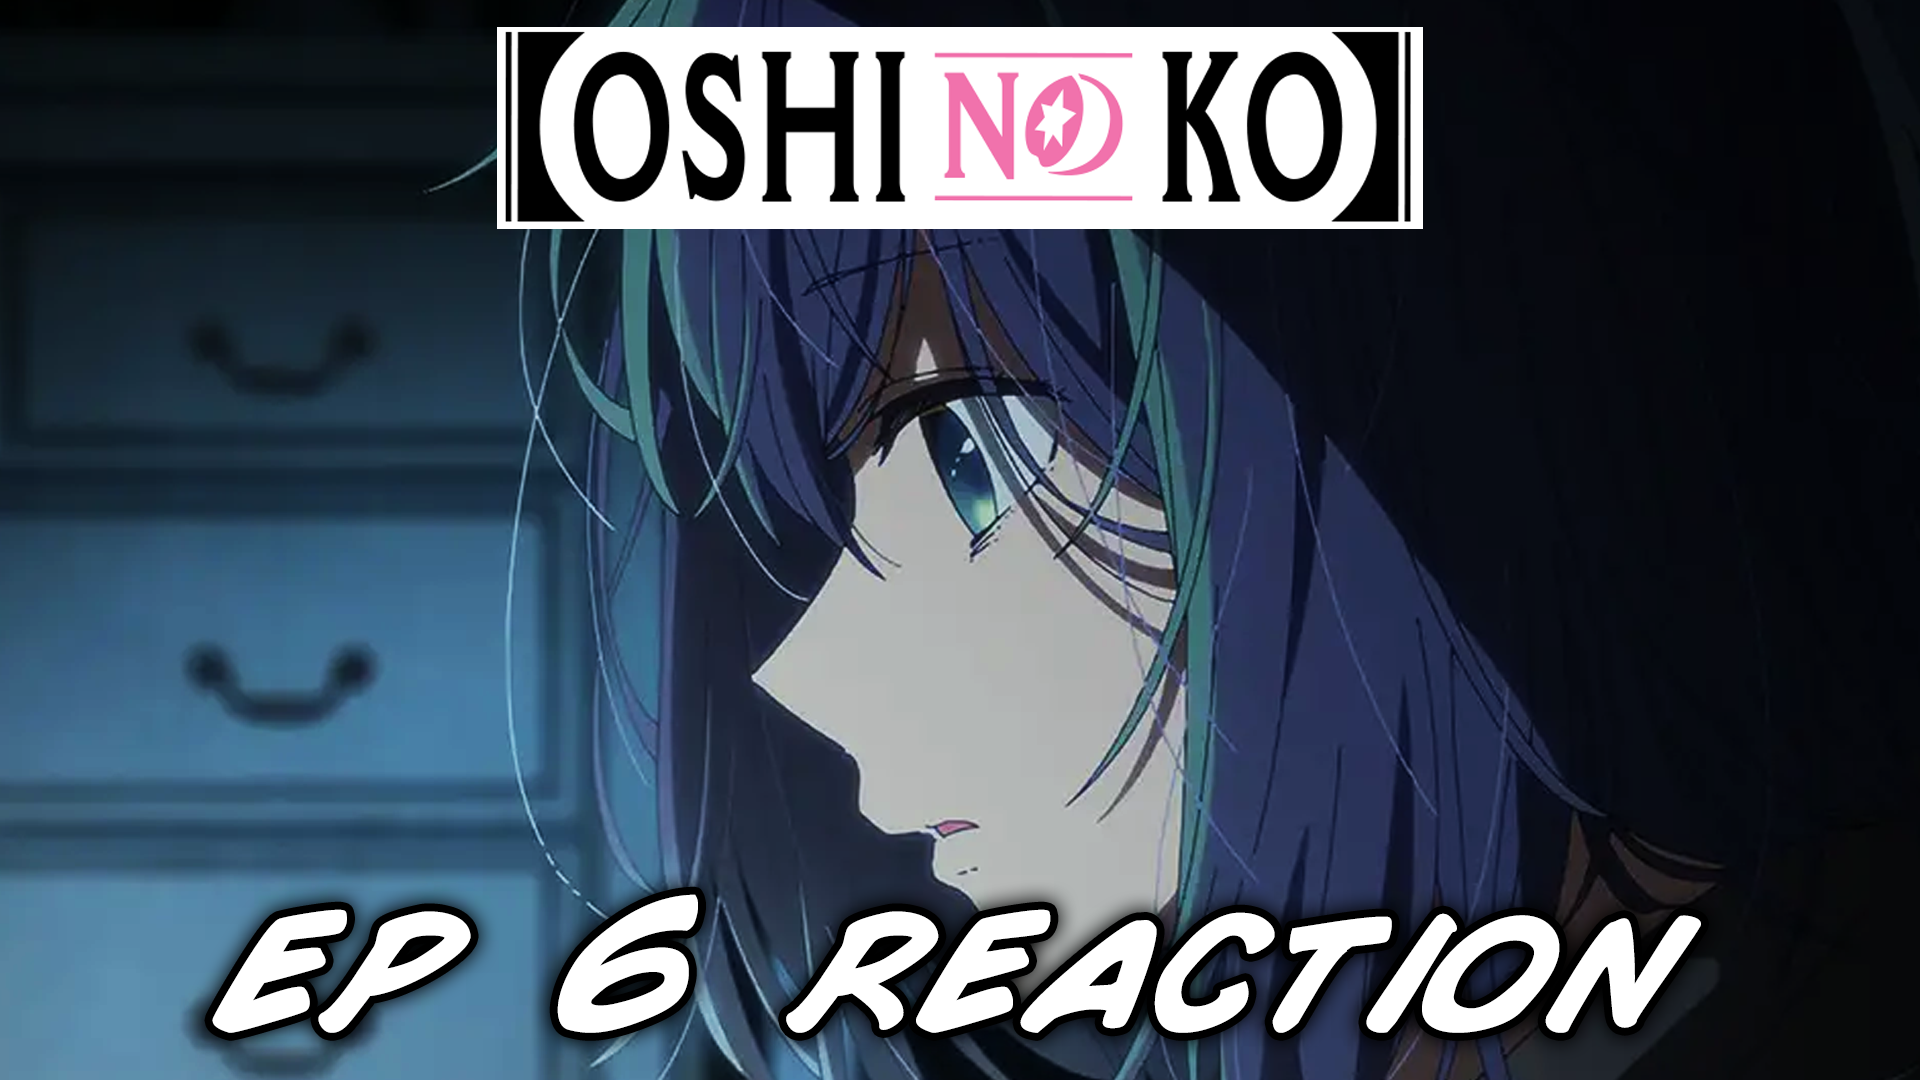 Oshi no Ko Ep 5 by drumrolltonyreacts from Patreon